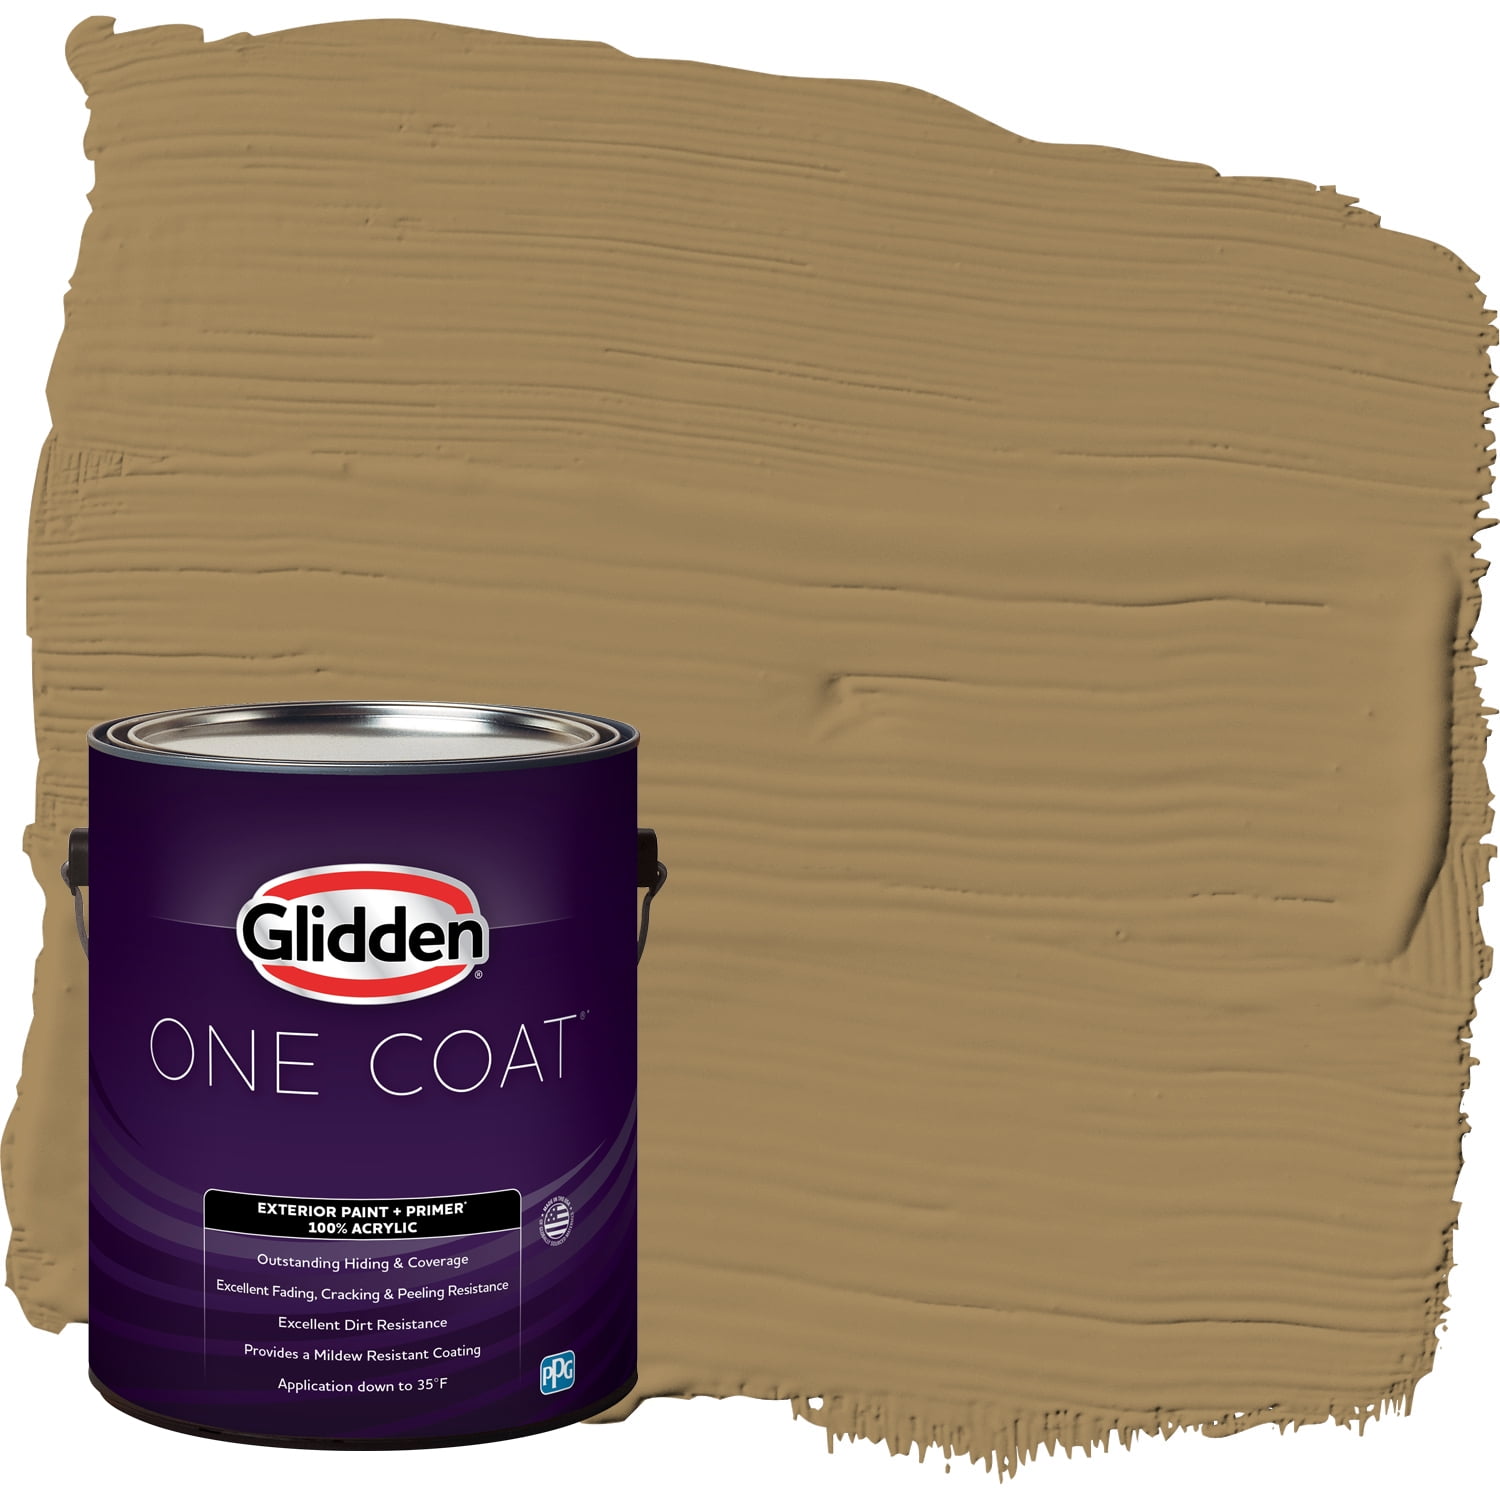 Glidden Fundamentals Interior Paint Heavy Cream / Beige, Flat, 5 Gallons 